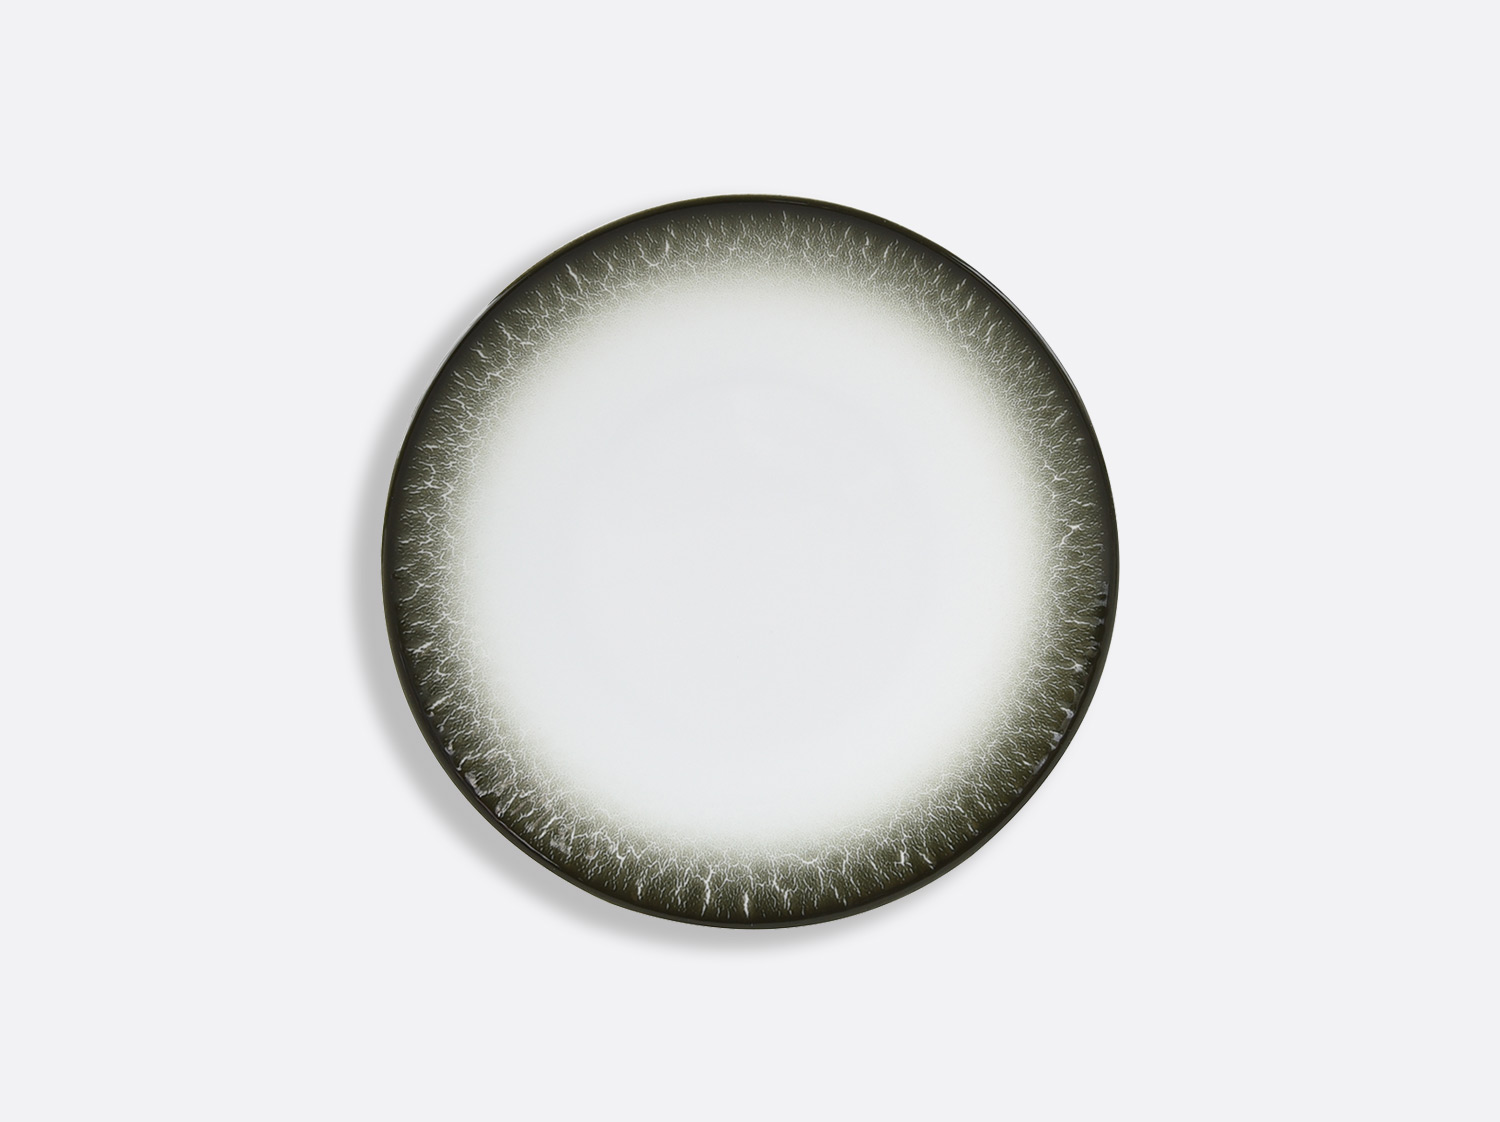 China Ultra flat plate 6.5" of the collection TERRA LICHEN | Bernardaud